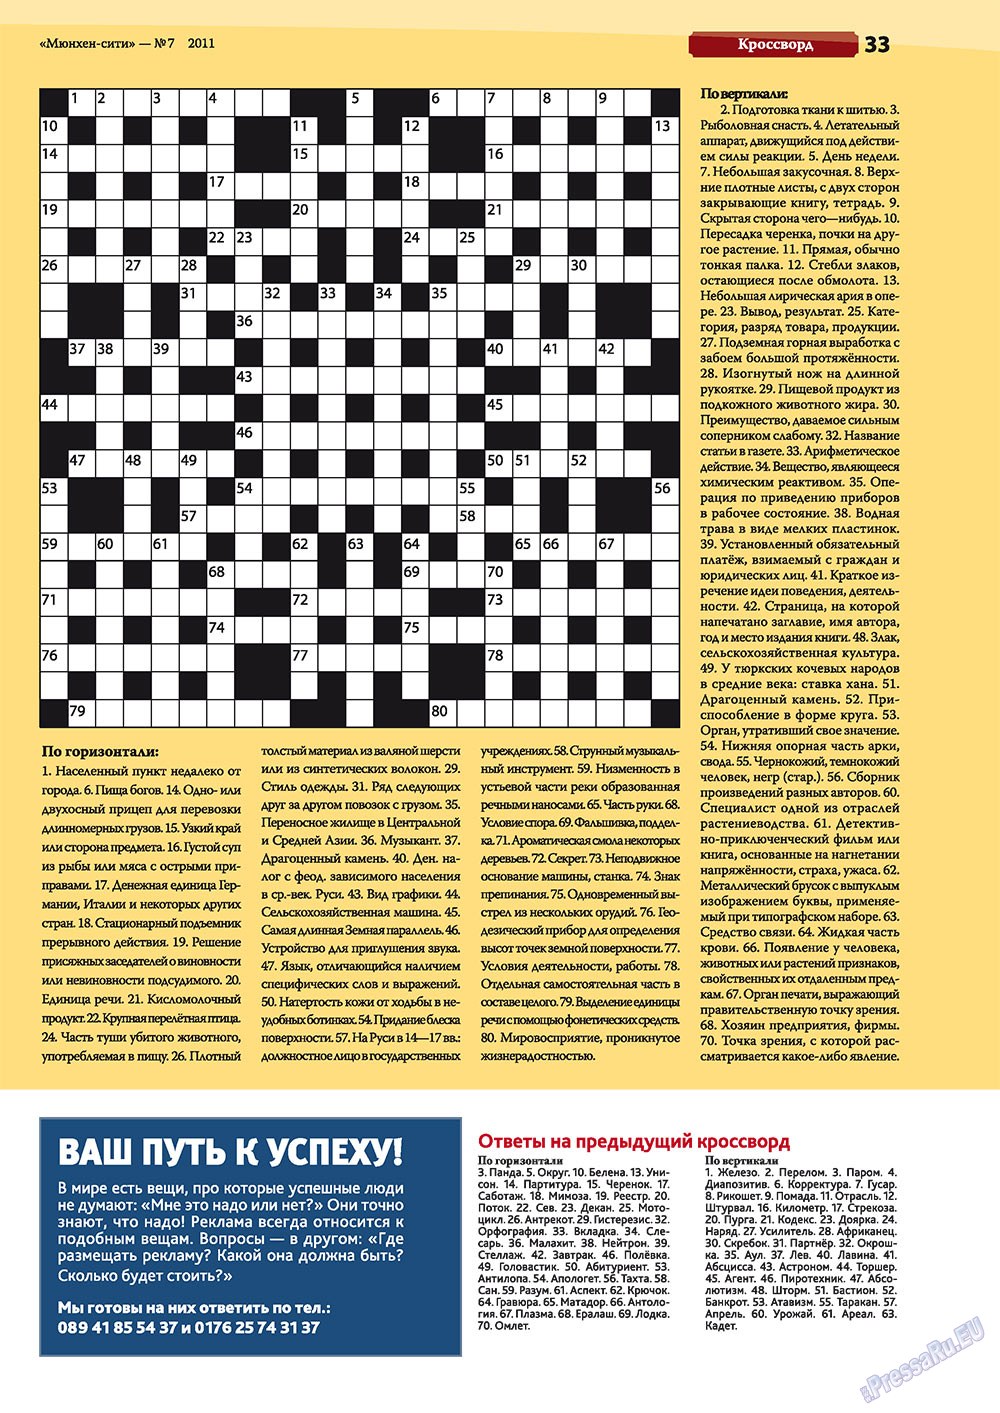 Мюнхен-сити, журнал. 2011 №7 стр.33